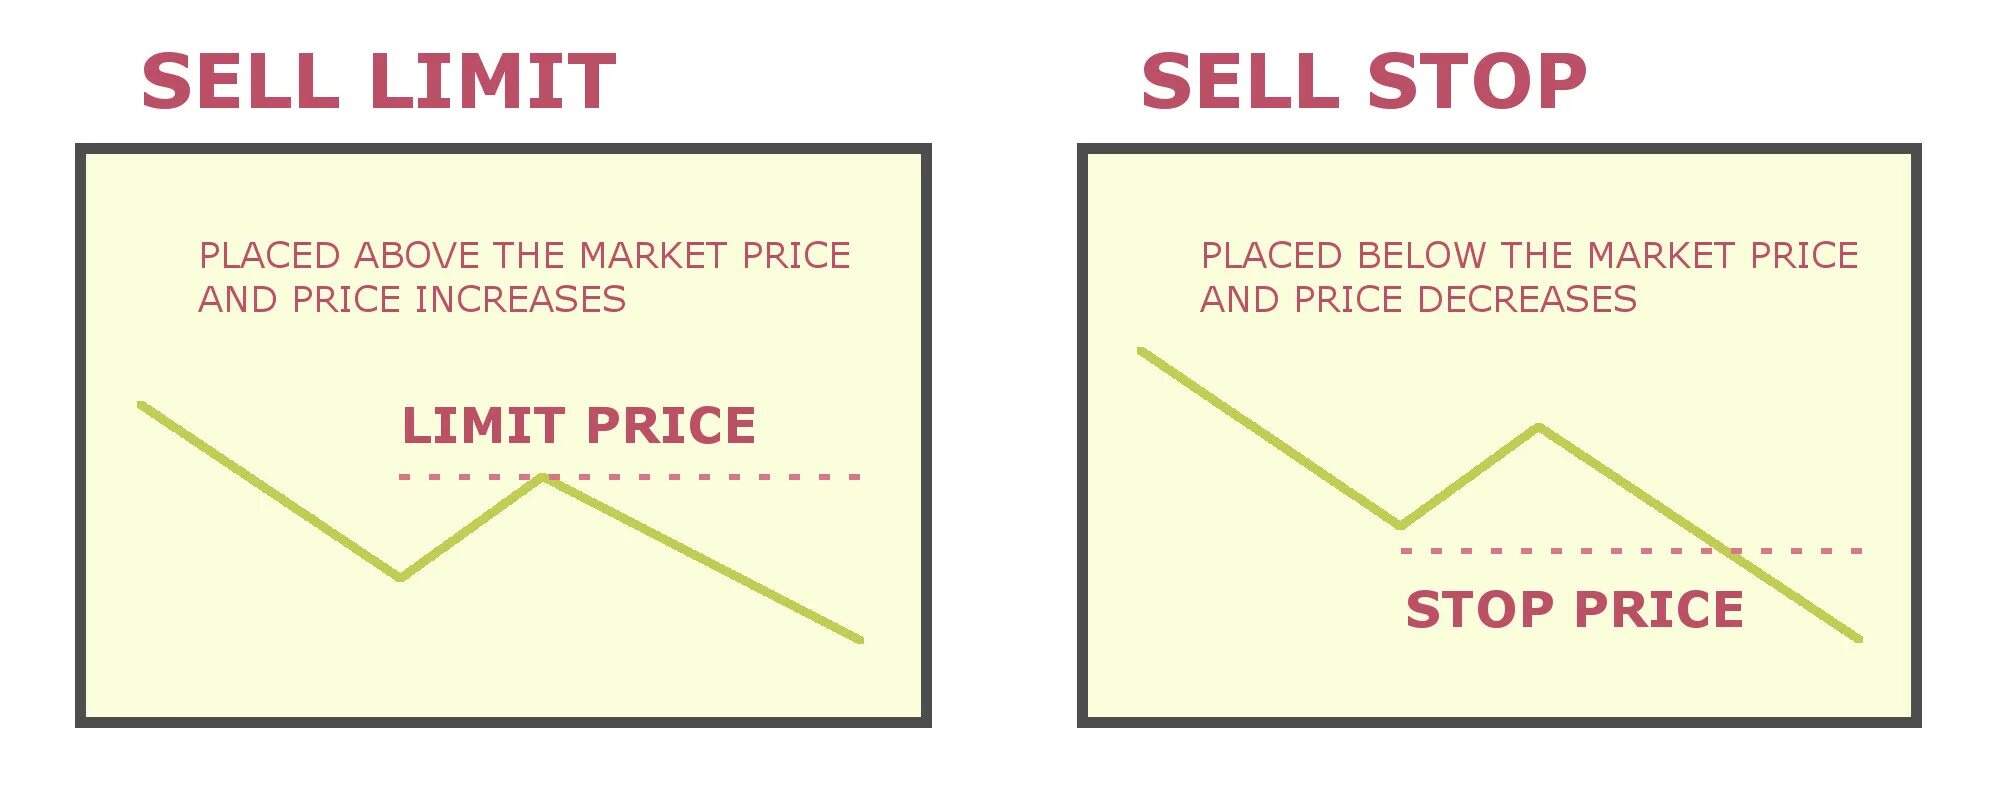 Sell limit. Sell stop sell limit. Buy limit sell limit buy stop sell stop. Селл лимит и селл стоп.